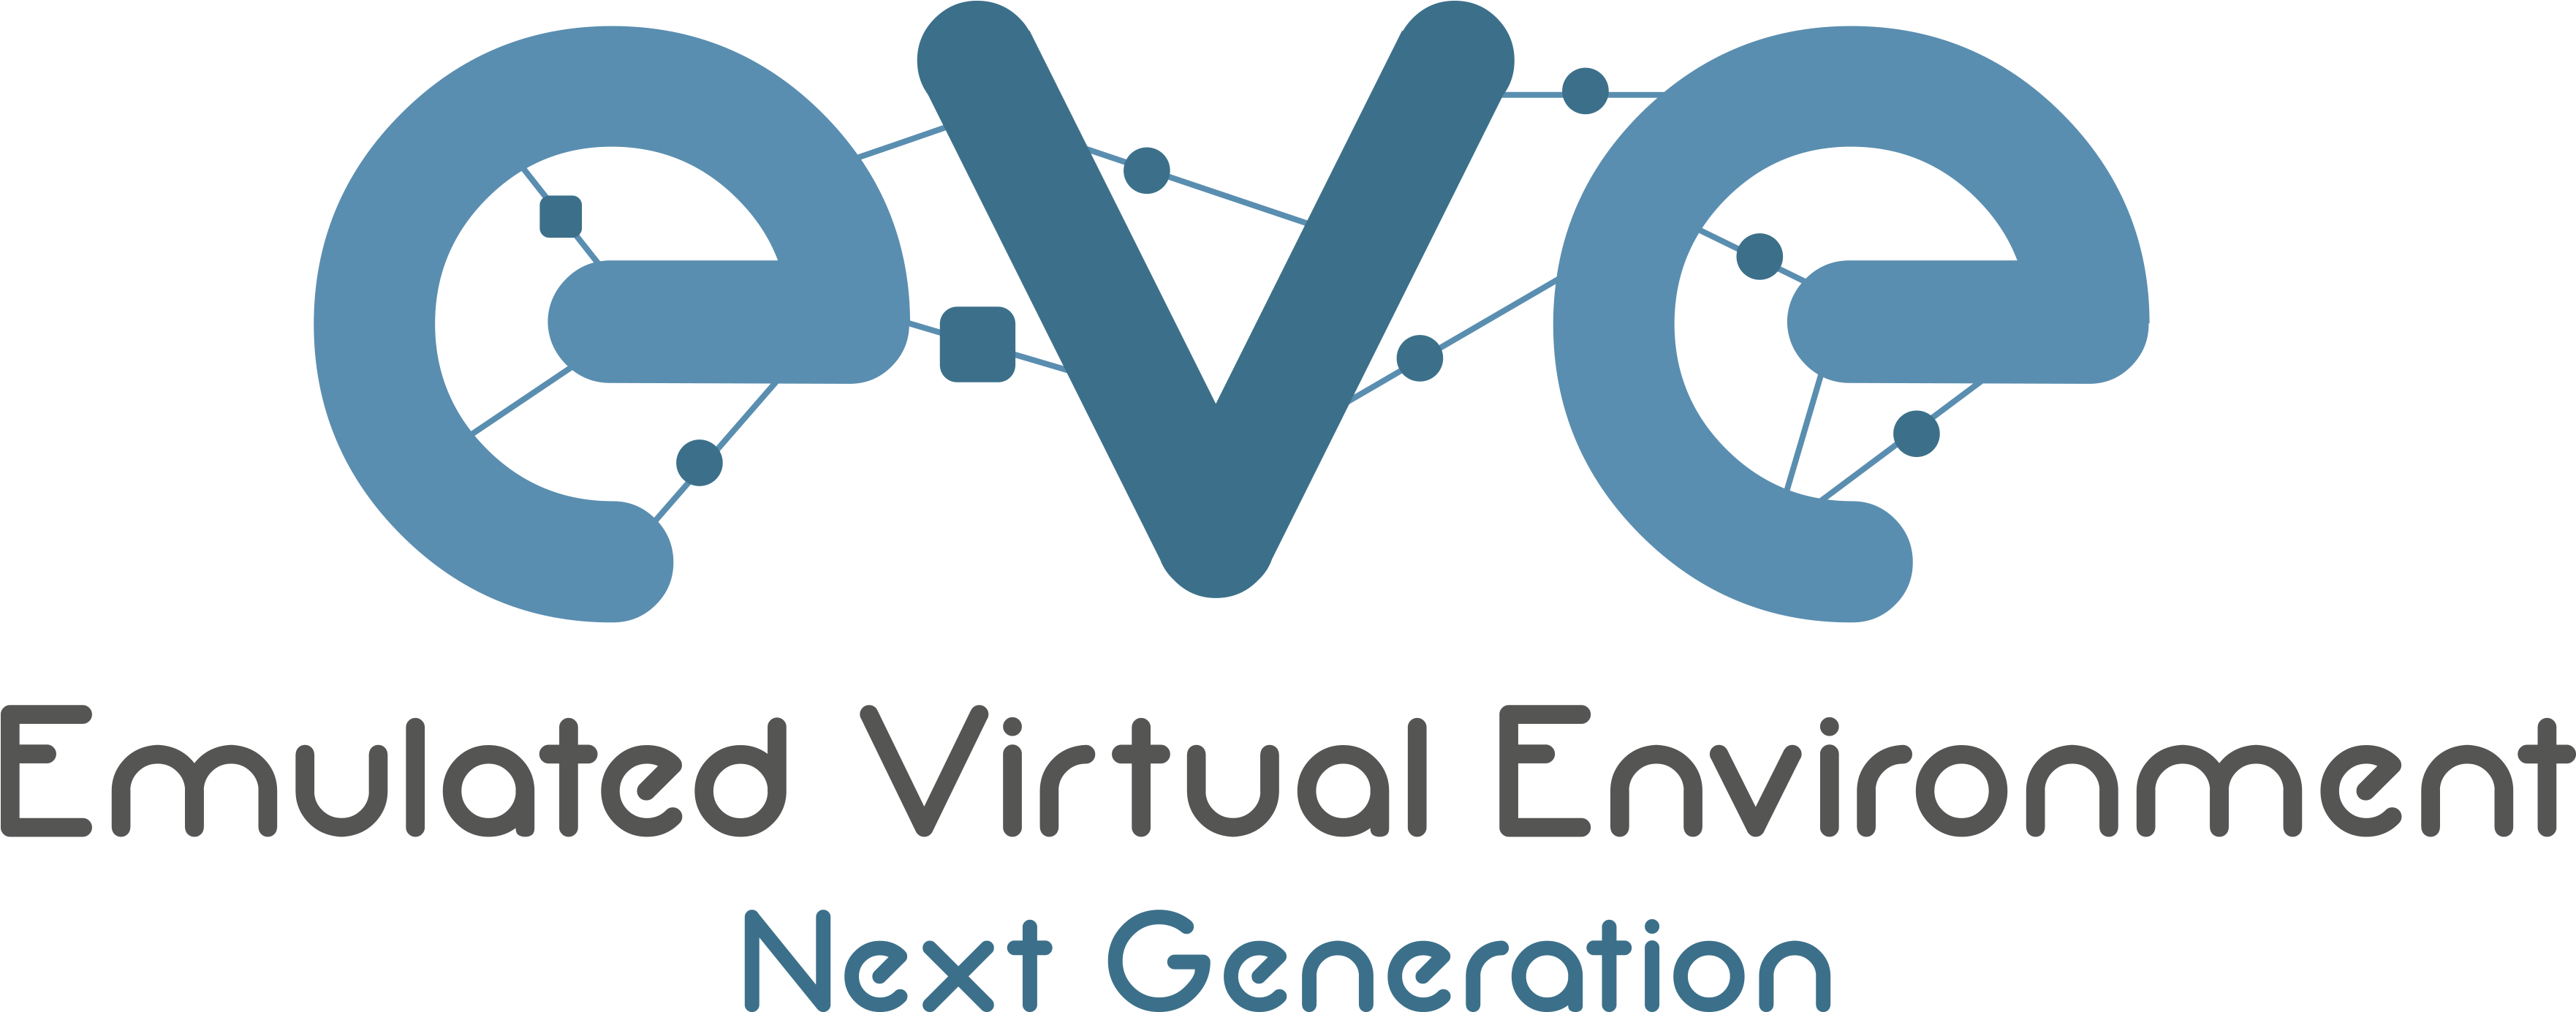 Logo Eve Color - Eve Ng Logo (4252x1701), Png Download